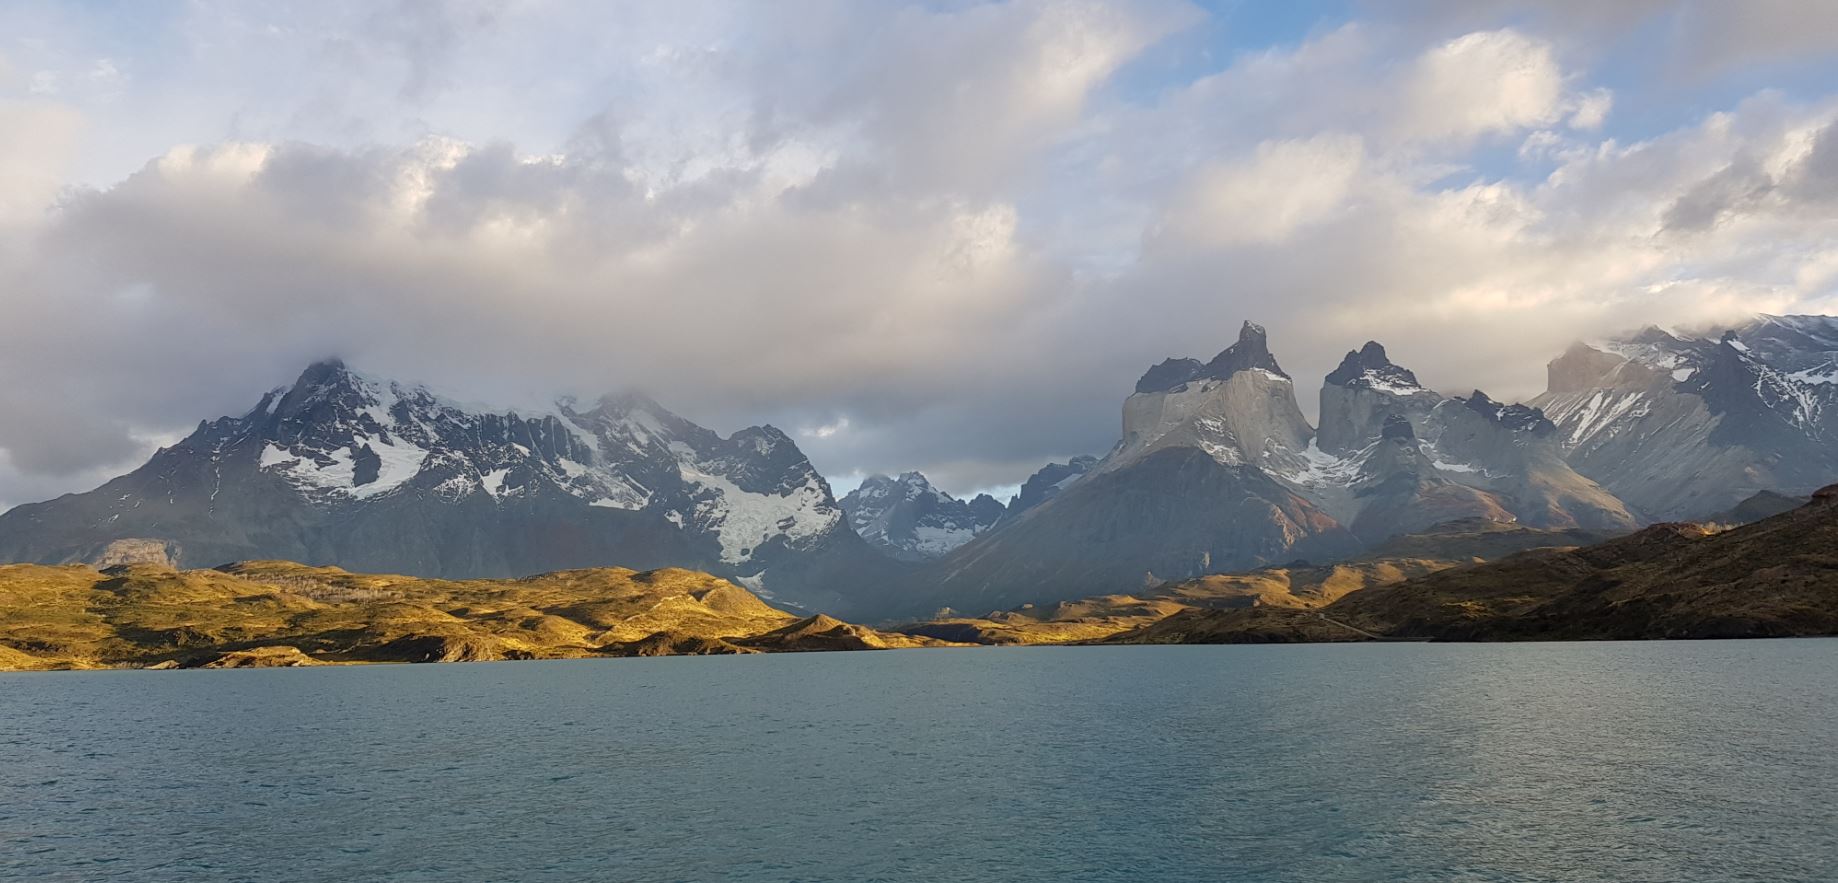 Parco Nazionale Torres del Paine, Cile. Autore e Copyright Marco Ramerini